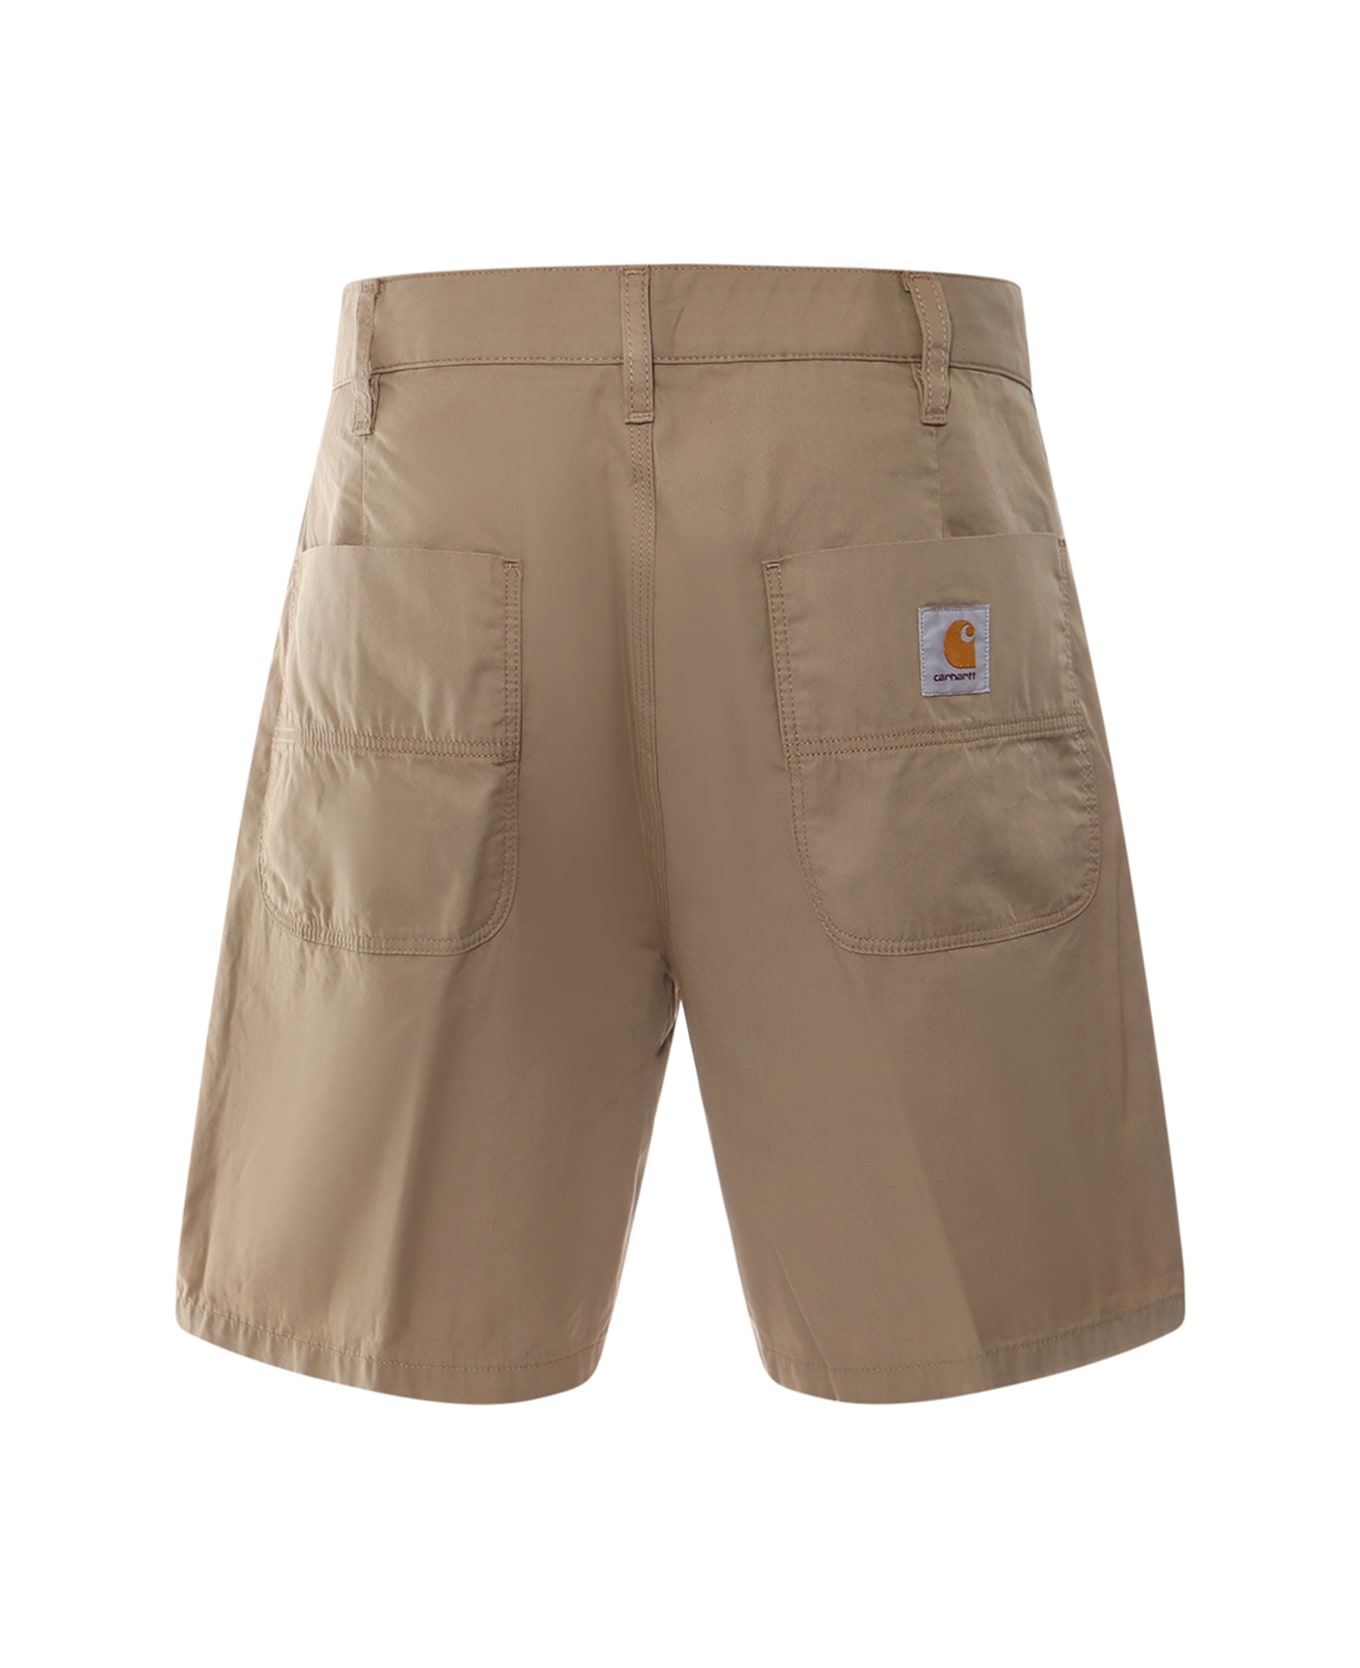 Carhartt Bermuda Shorts - Beige